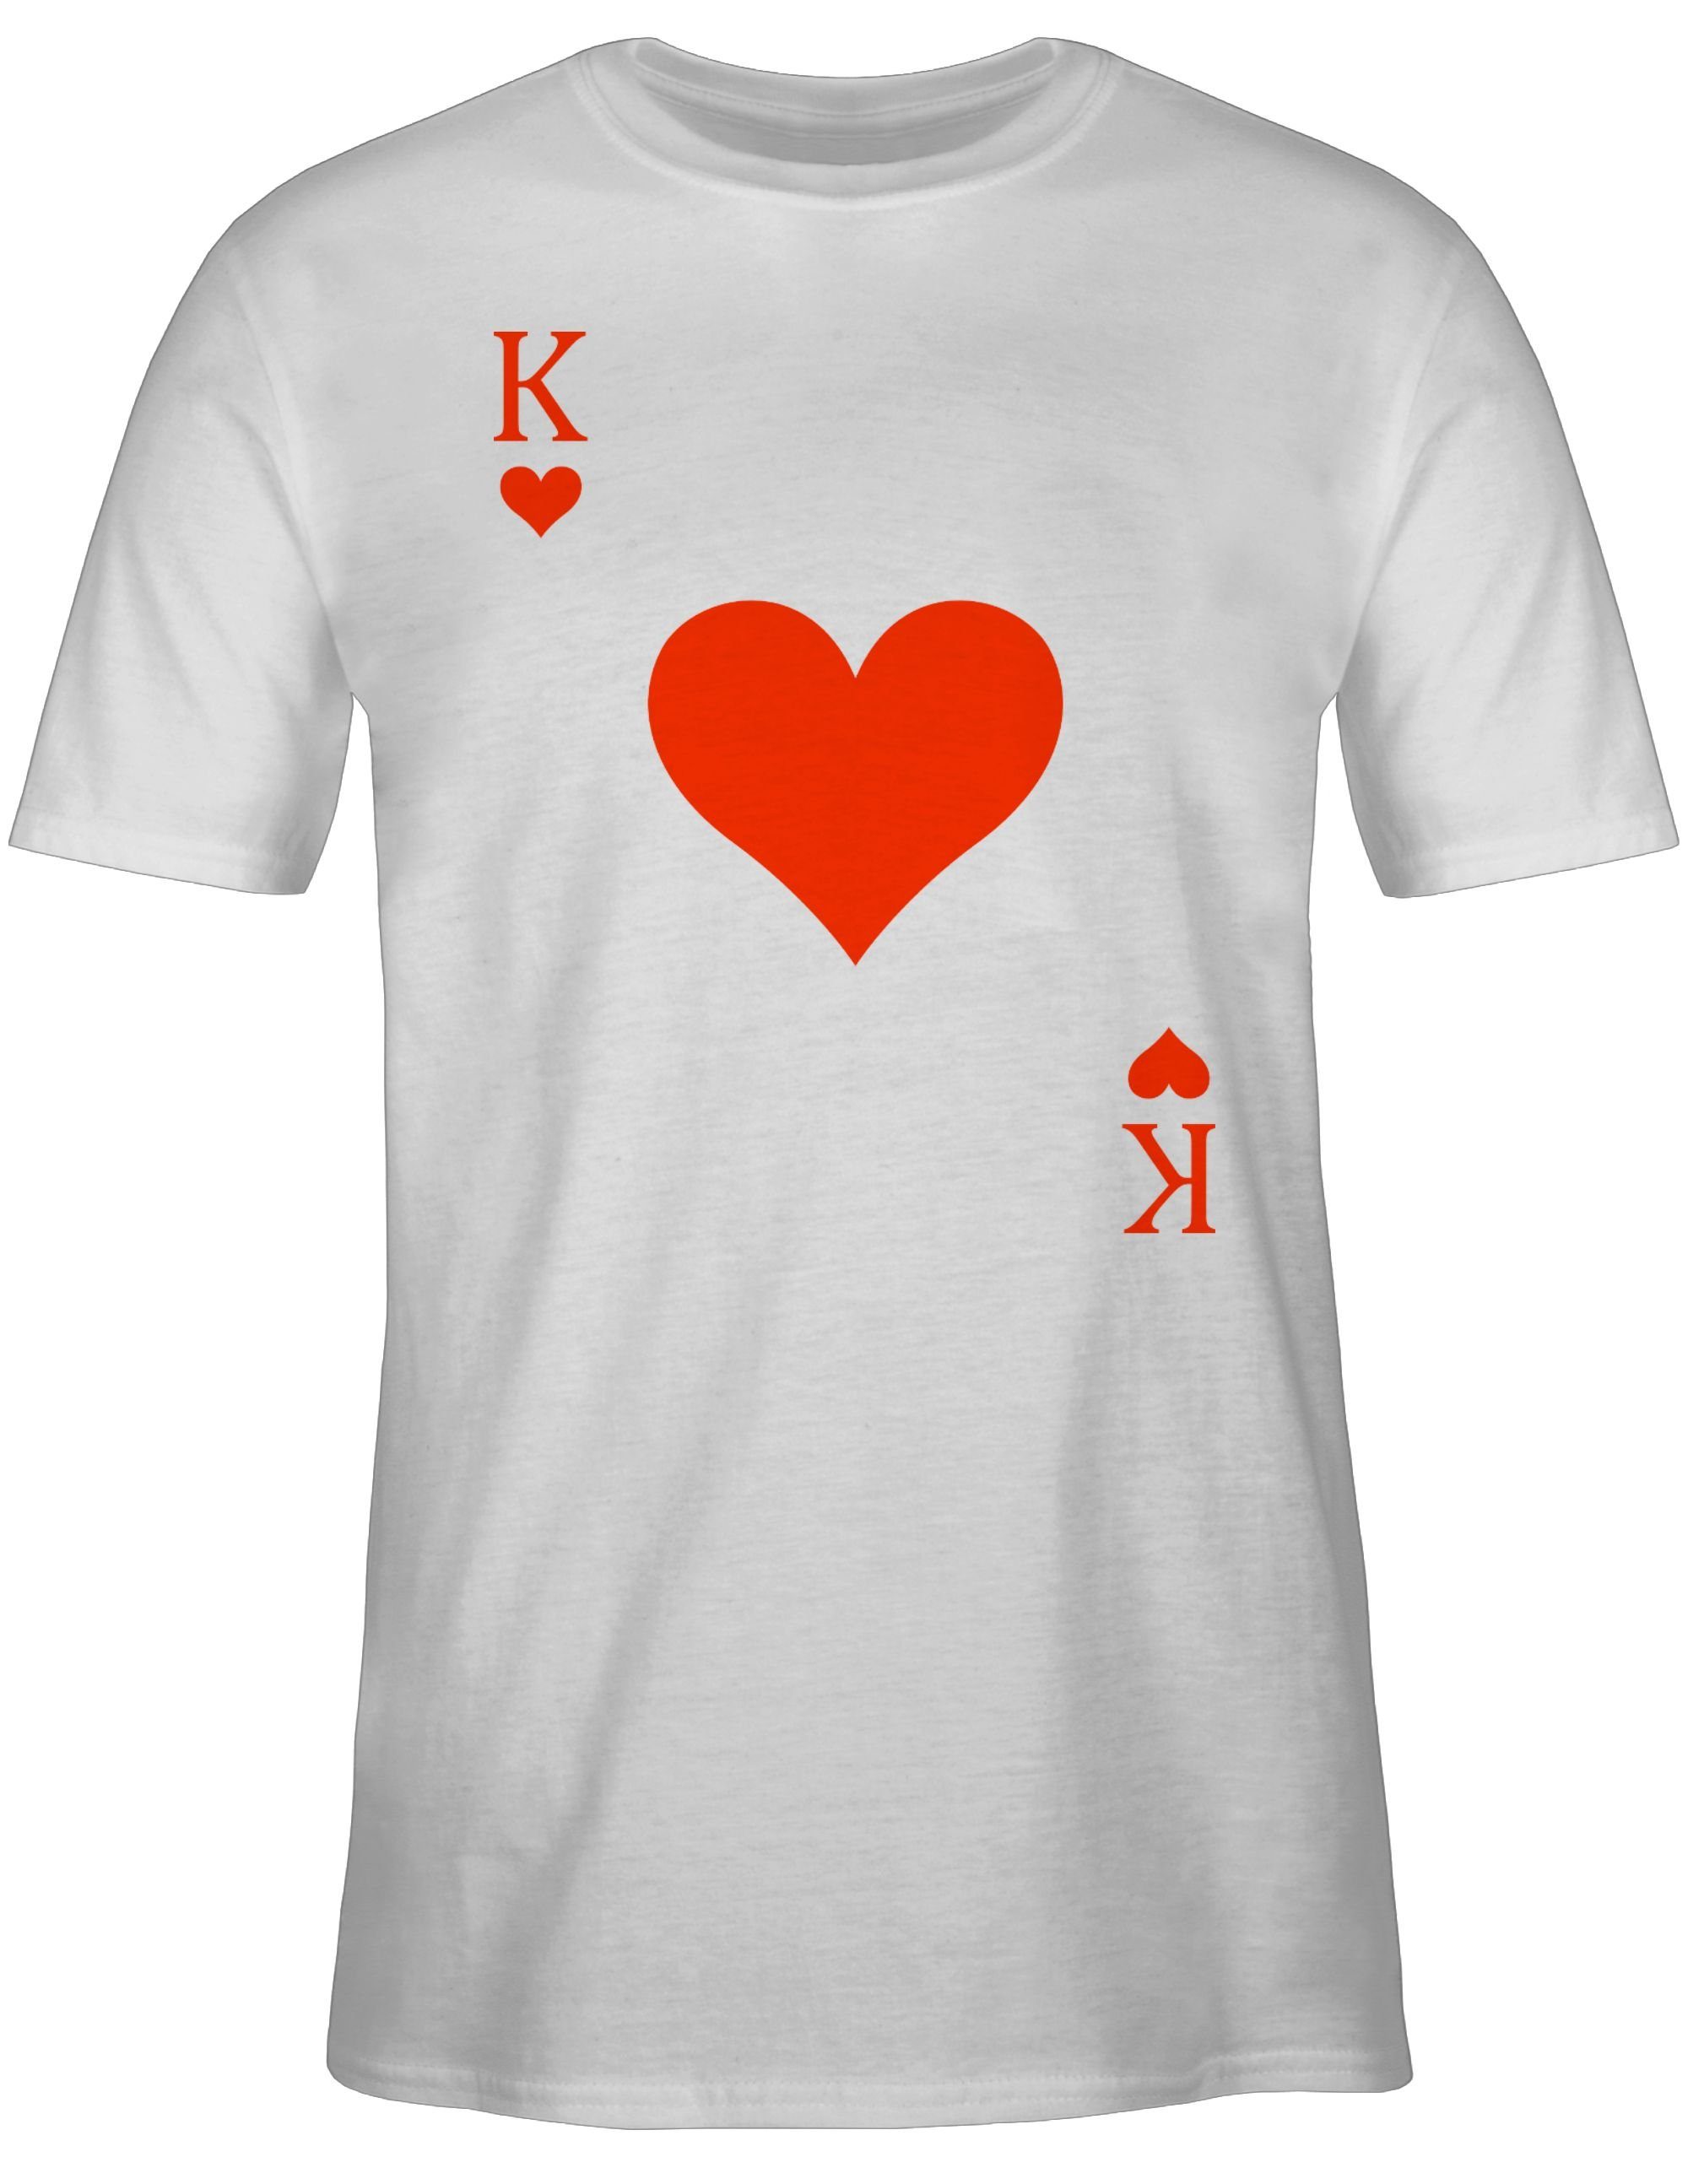 Shirtracer T-Shirt Herz König - & - Weiß Karneval Spielkarte 2 Kartenspiel Fasching He Herzkönig Karneval Queen King